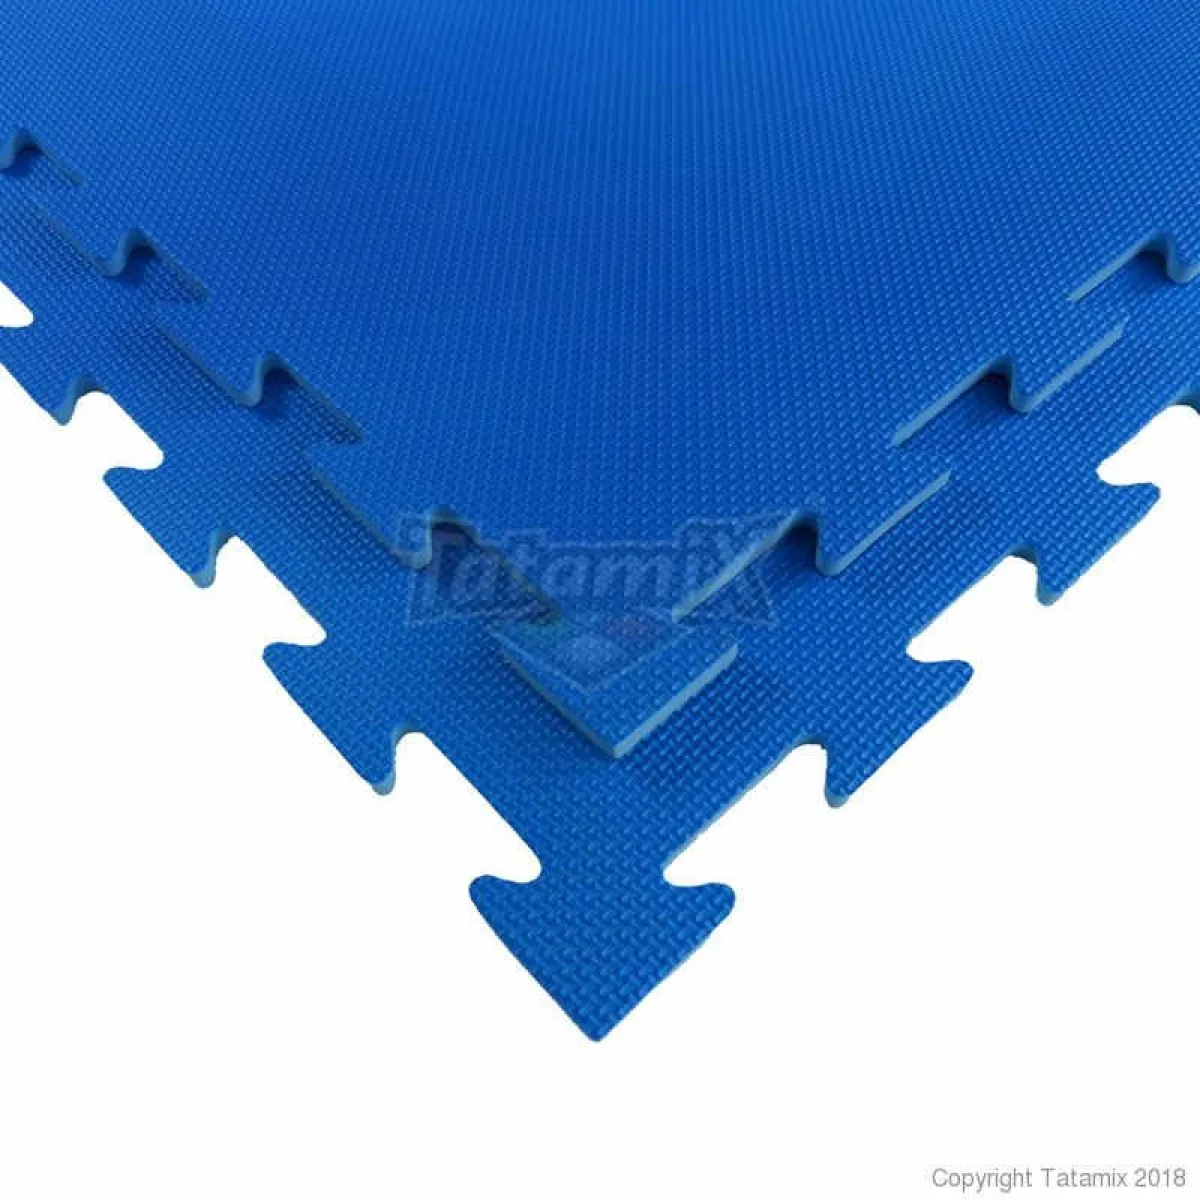 Sportmattematte Tatamix R10X blau 100 cm x 100 cm x 1 cm